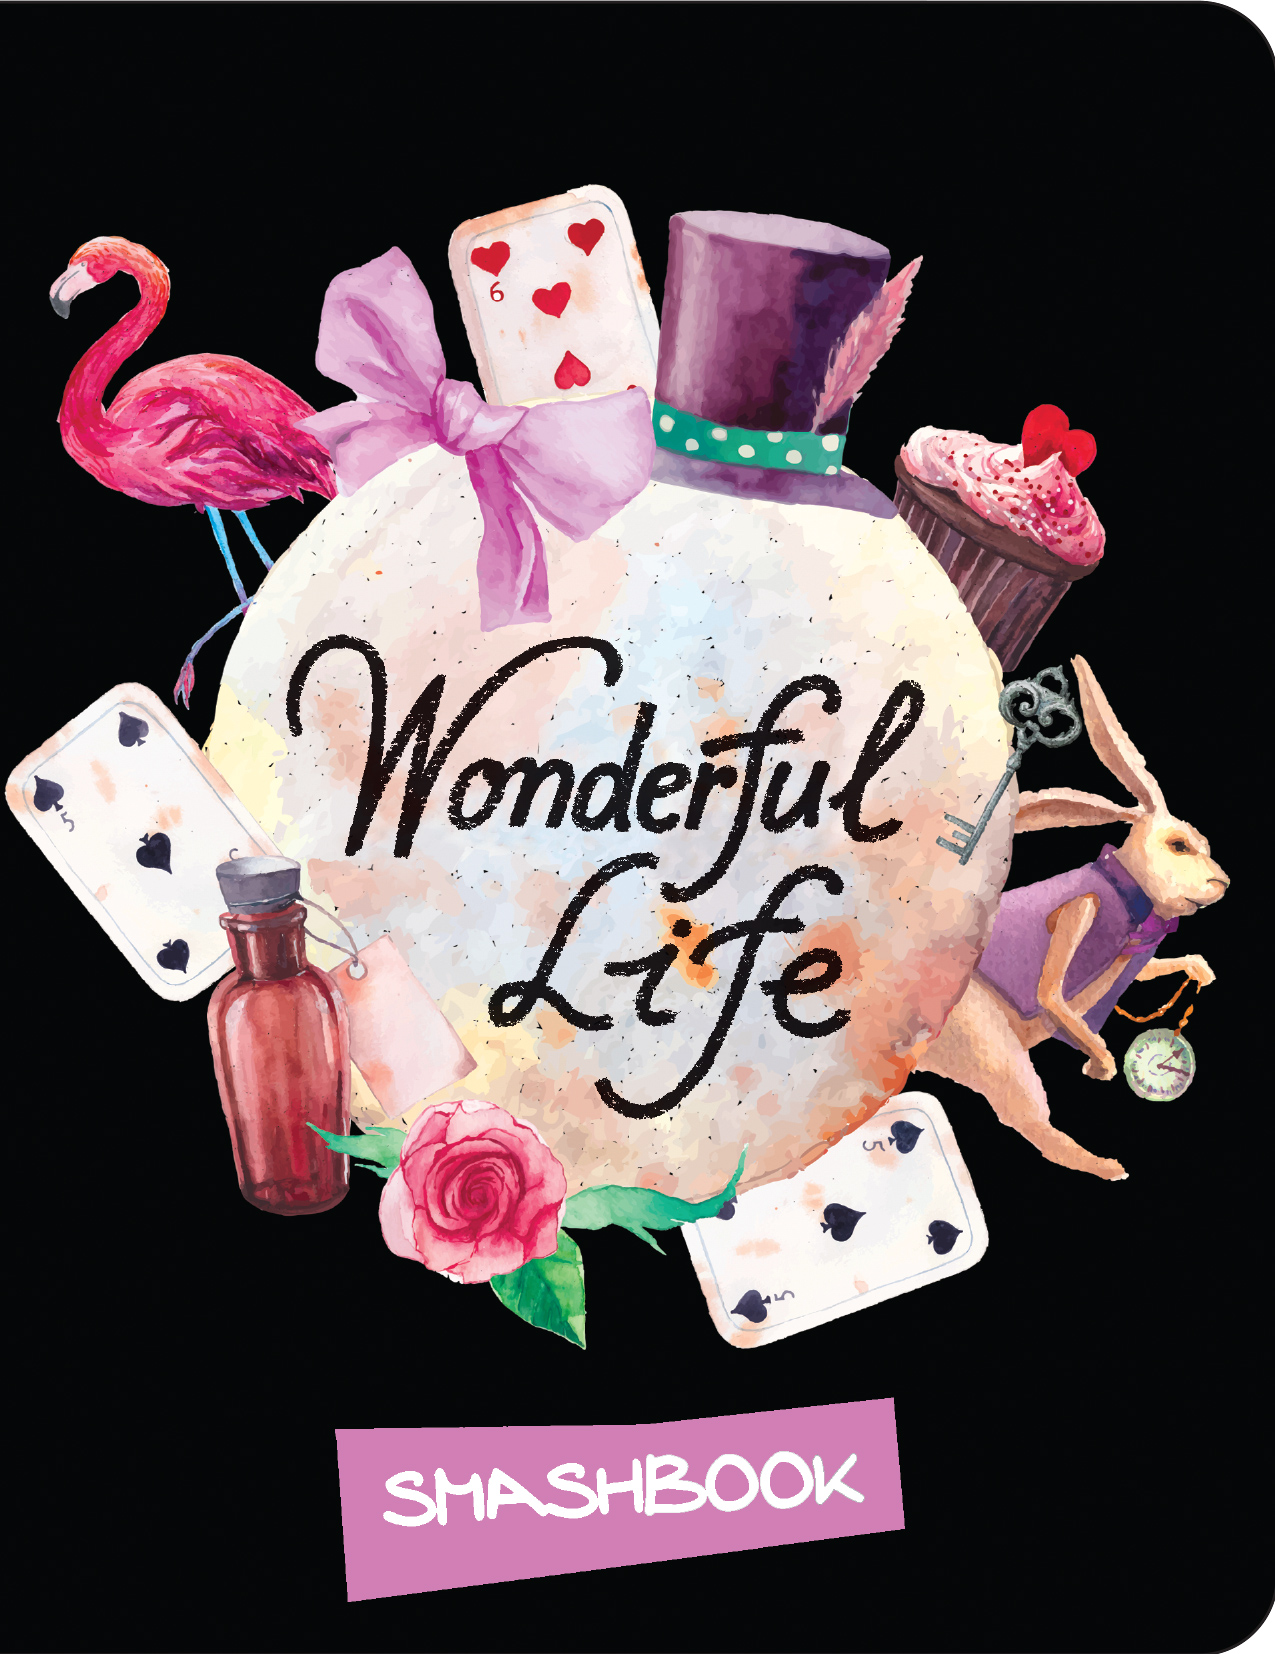 Wonderful life (+ )